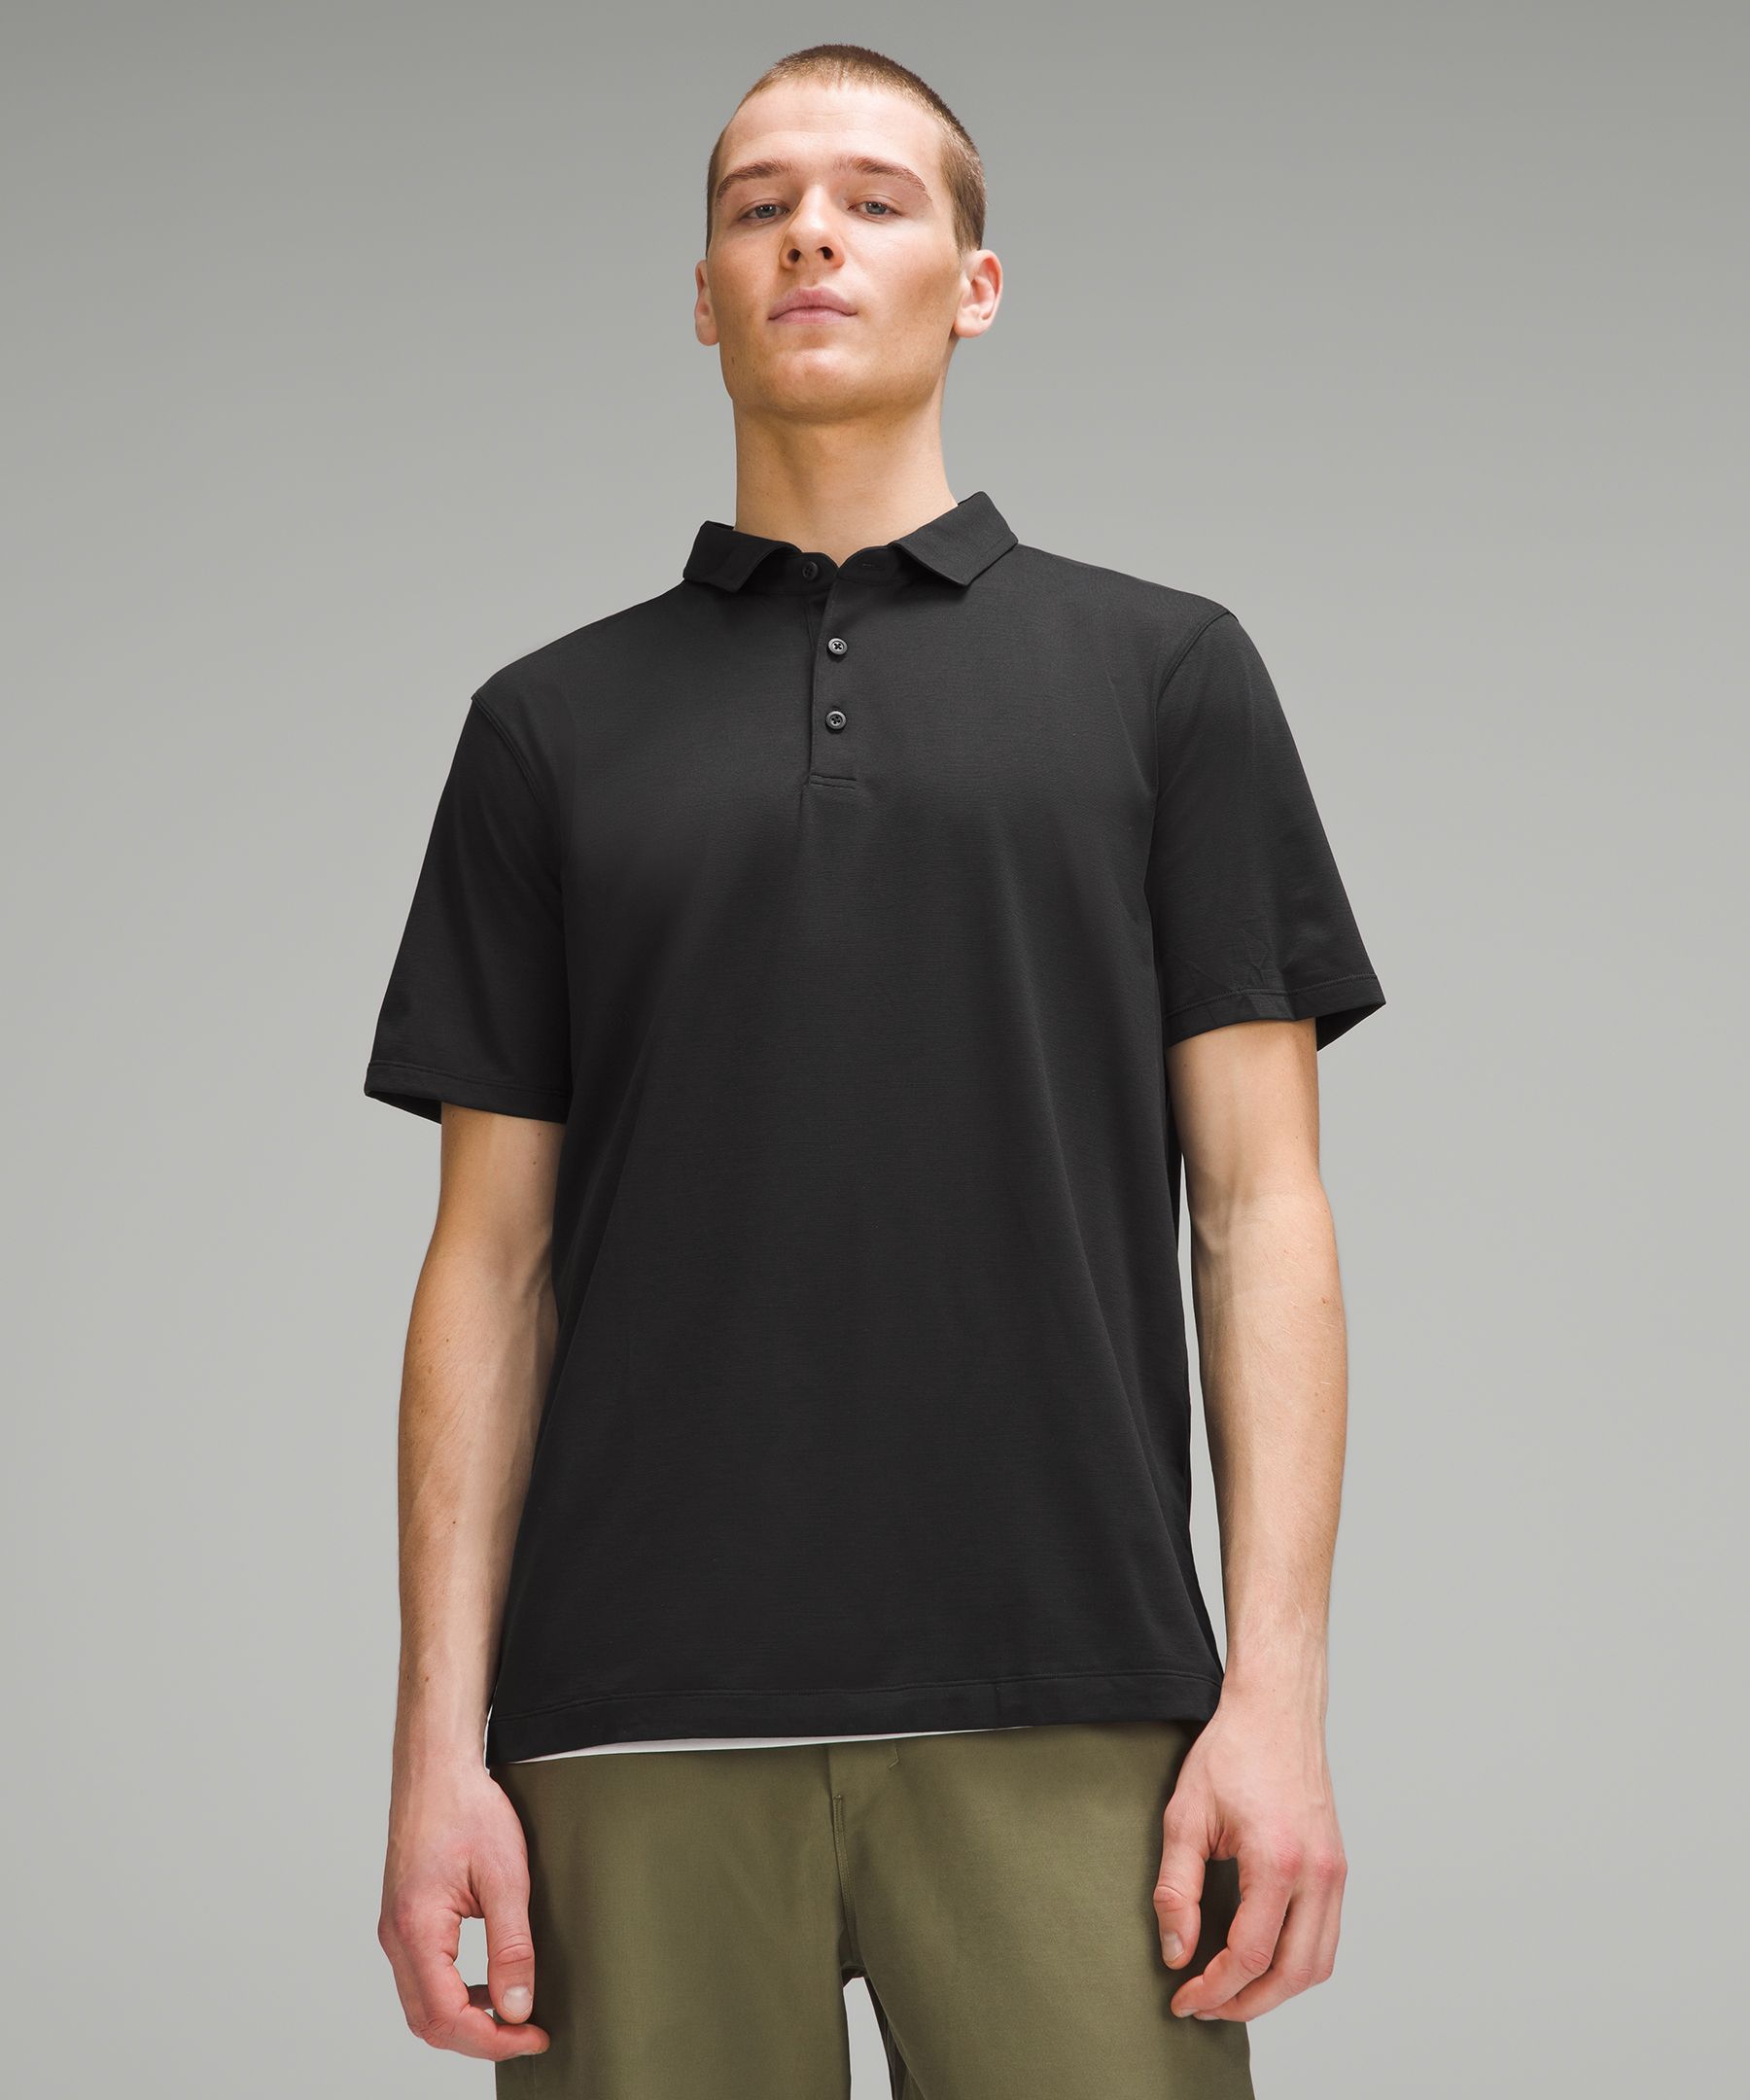 Lululemon Evolution Short-Sleeve Polo Shirt - Black/Neutral - Size S